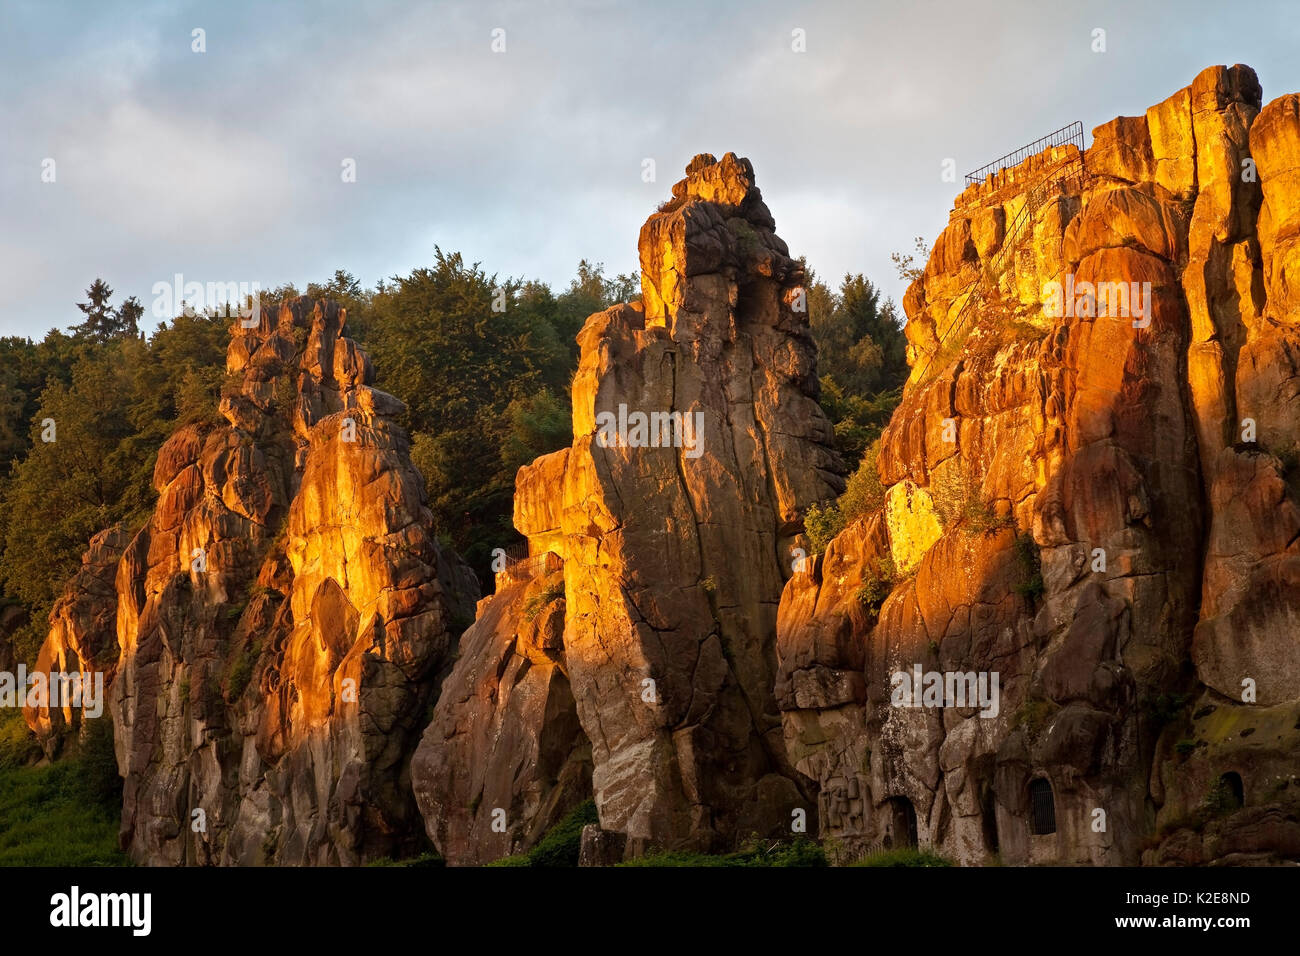 Extern stones, Externsteine, sunrise, sandstone formation, Teutoburg Forest, Horn-Bad Meinberg, North Rhine-Westphalia, Germany Stock Photo